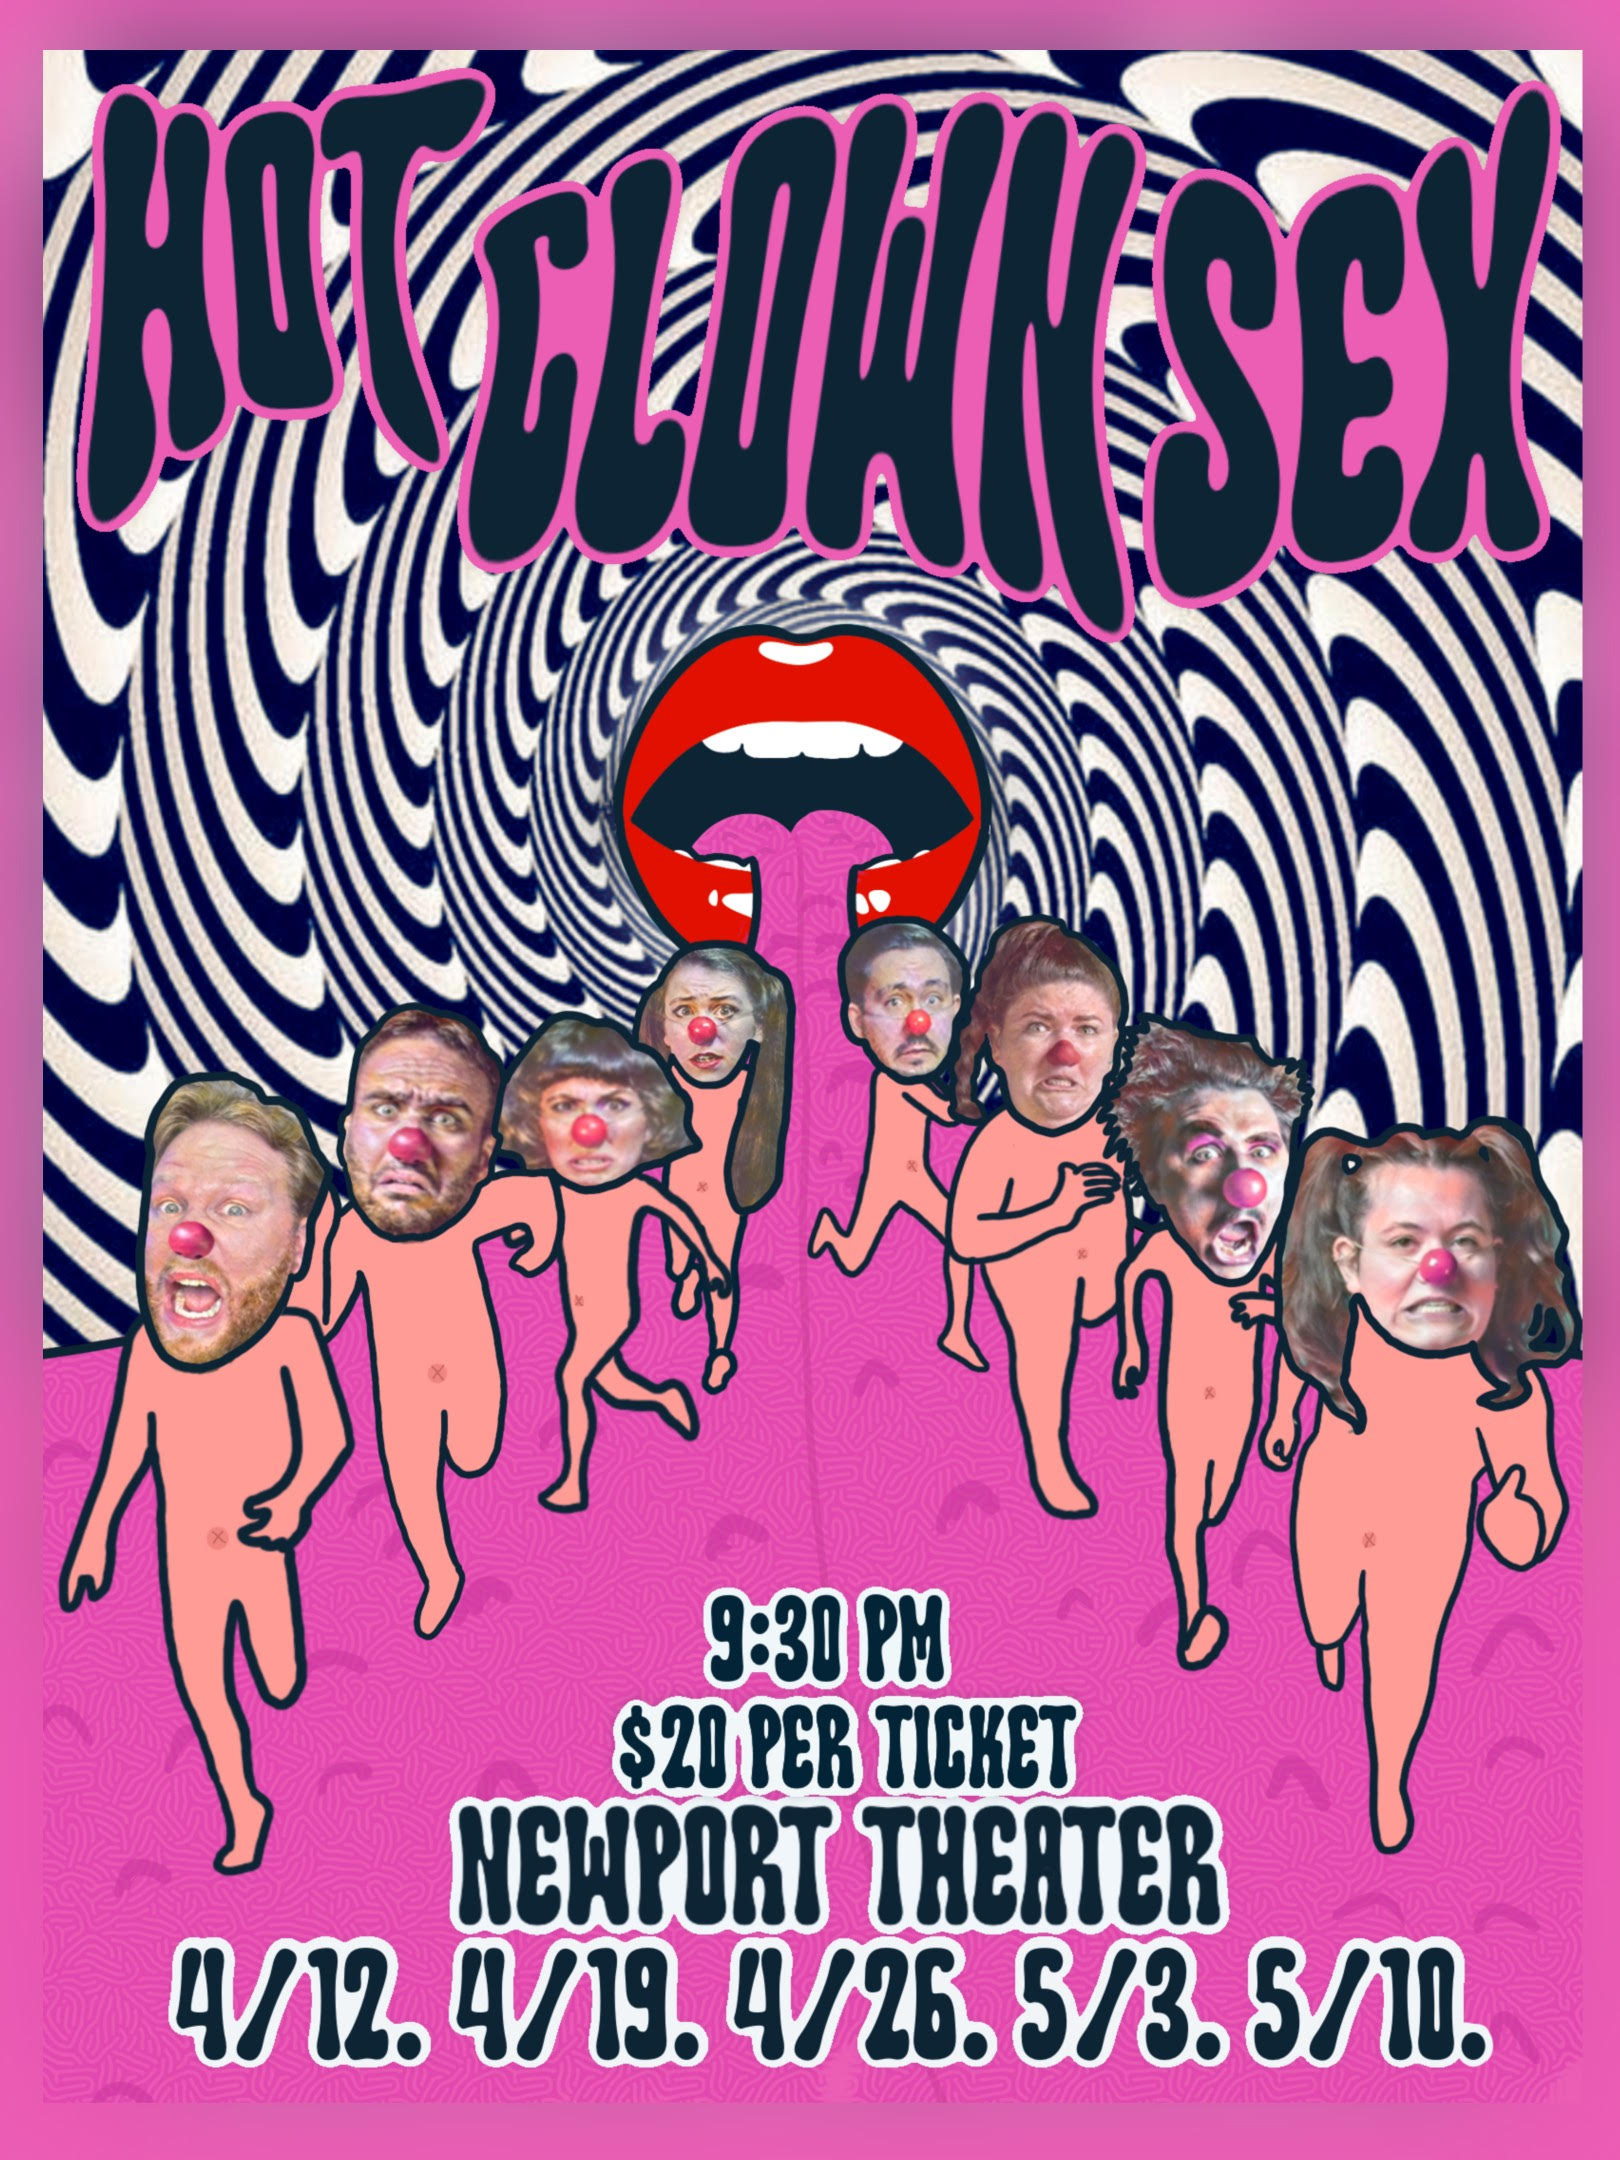 Hot Clown Sex. Fridays, April 12-May 10. 9pm. Newport Theater.